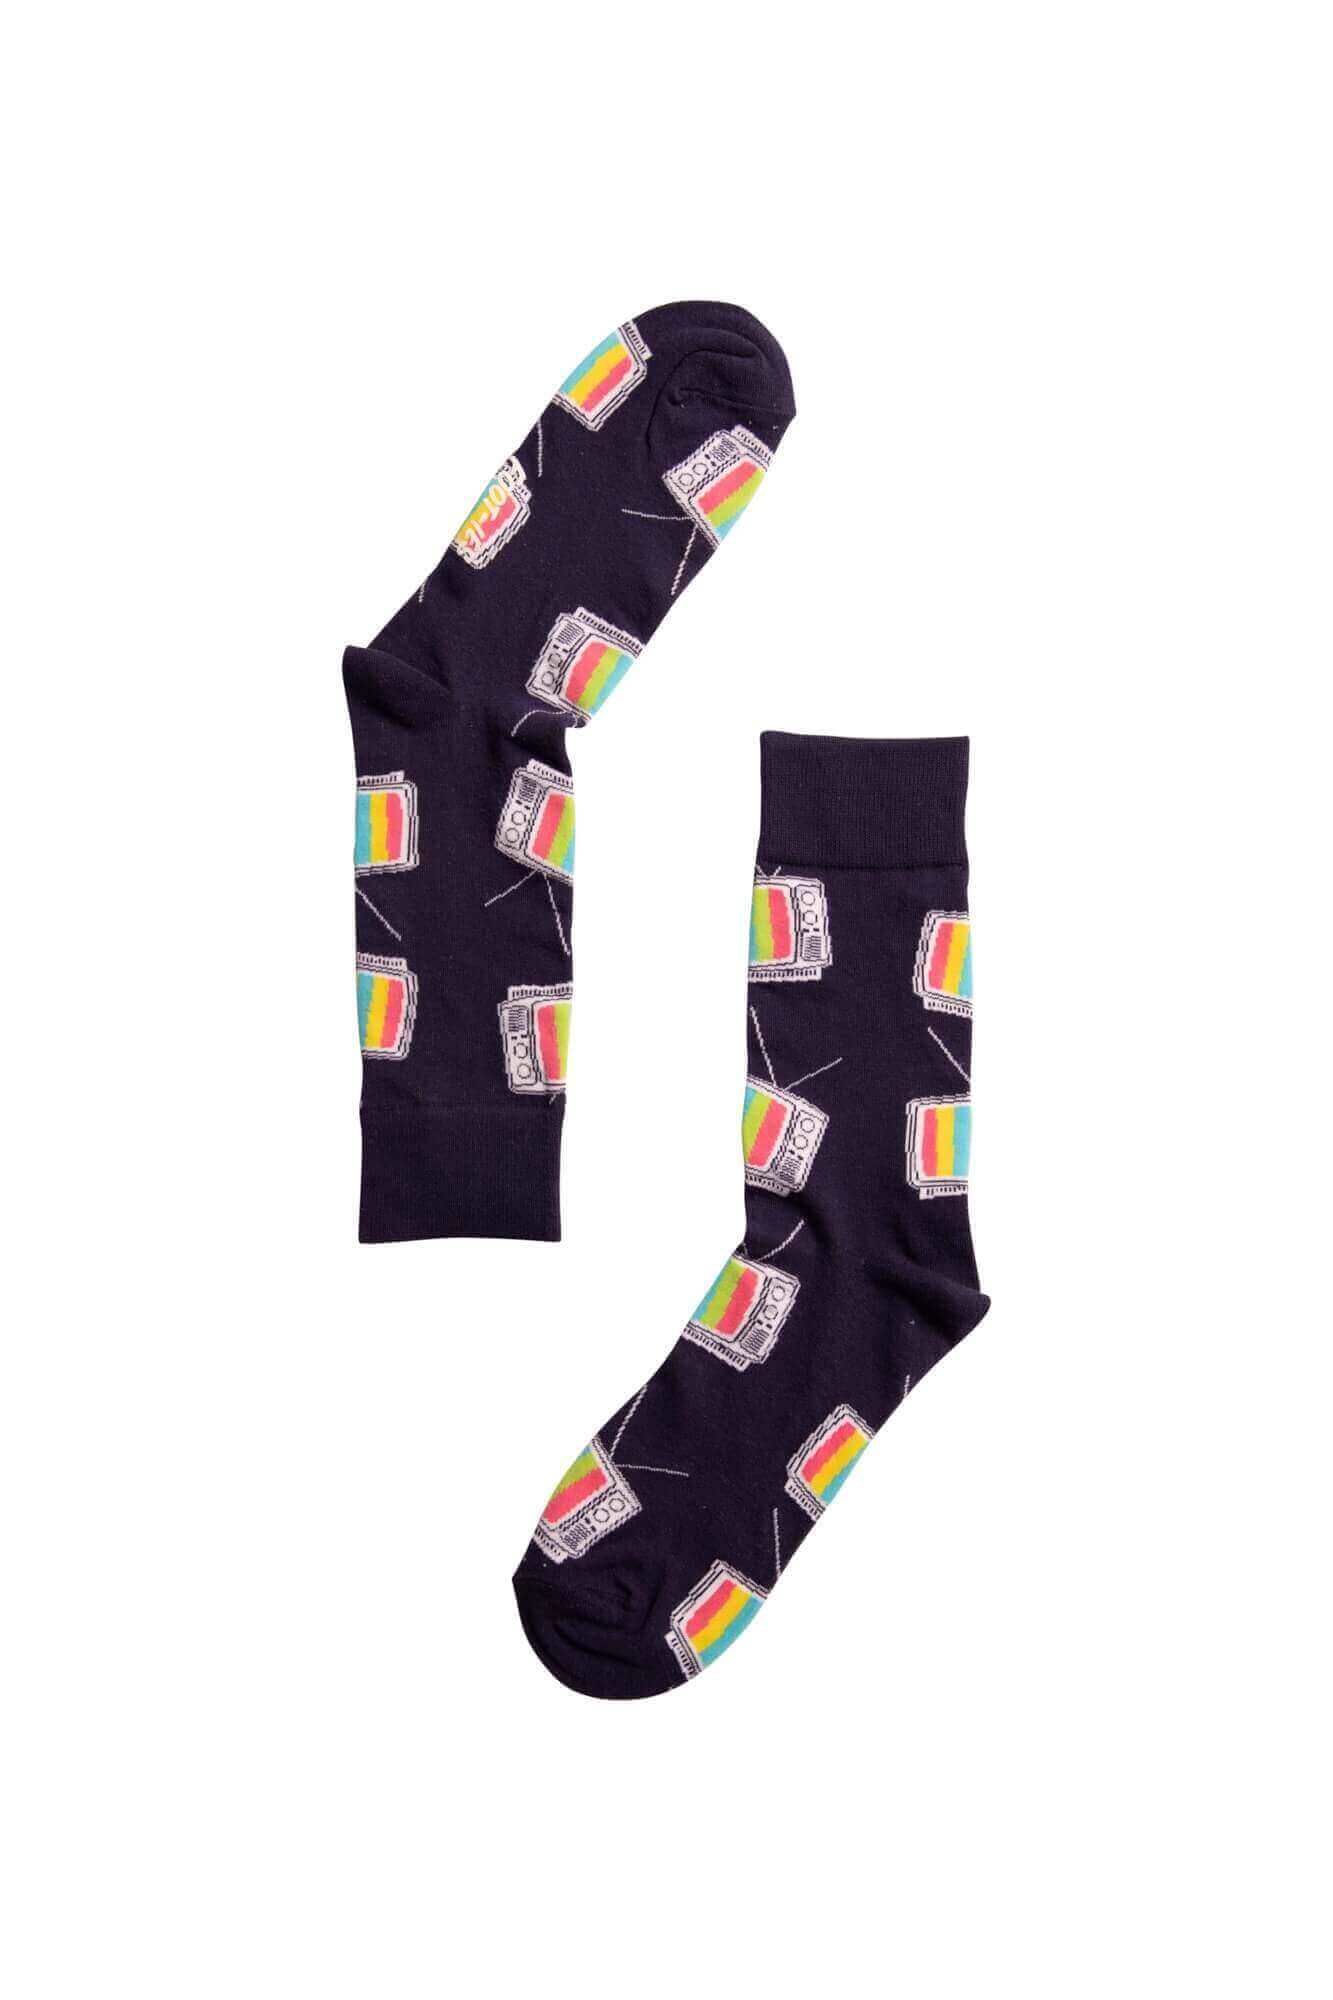 Retro Socks Range M/L